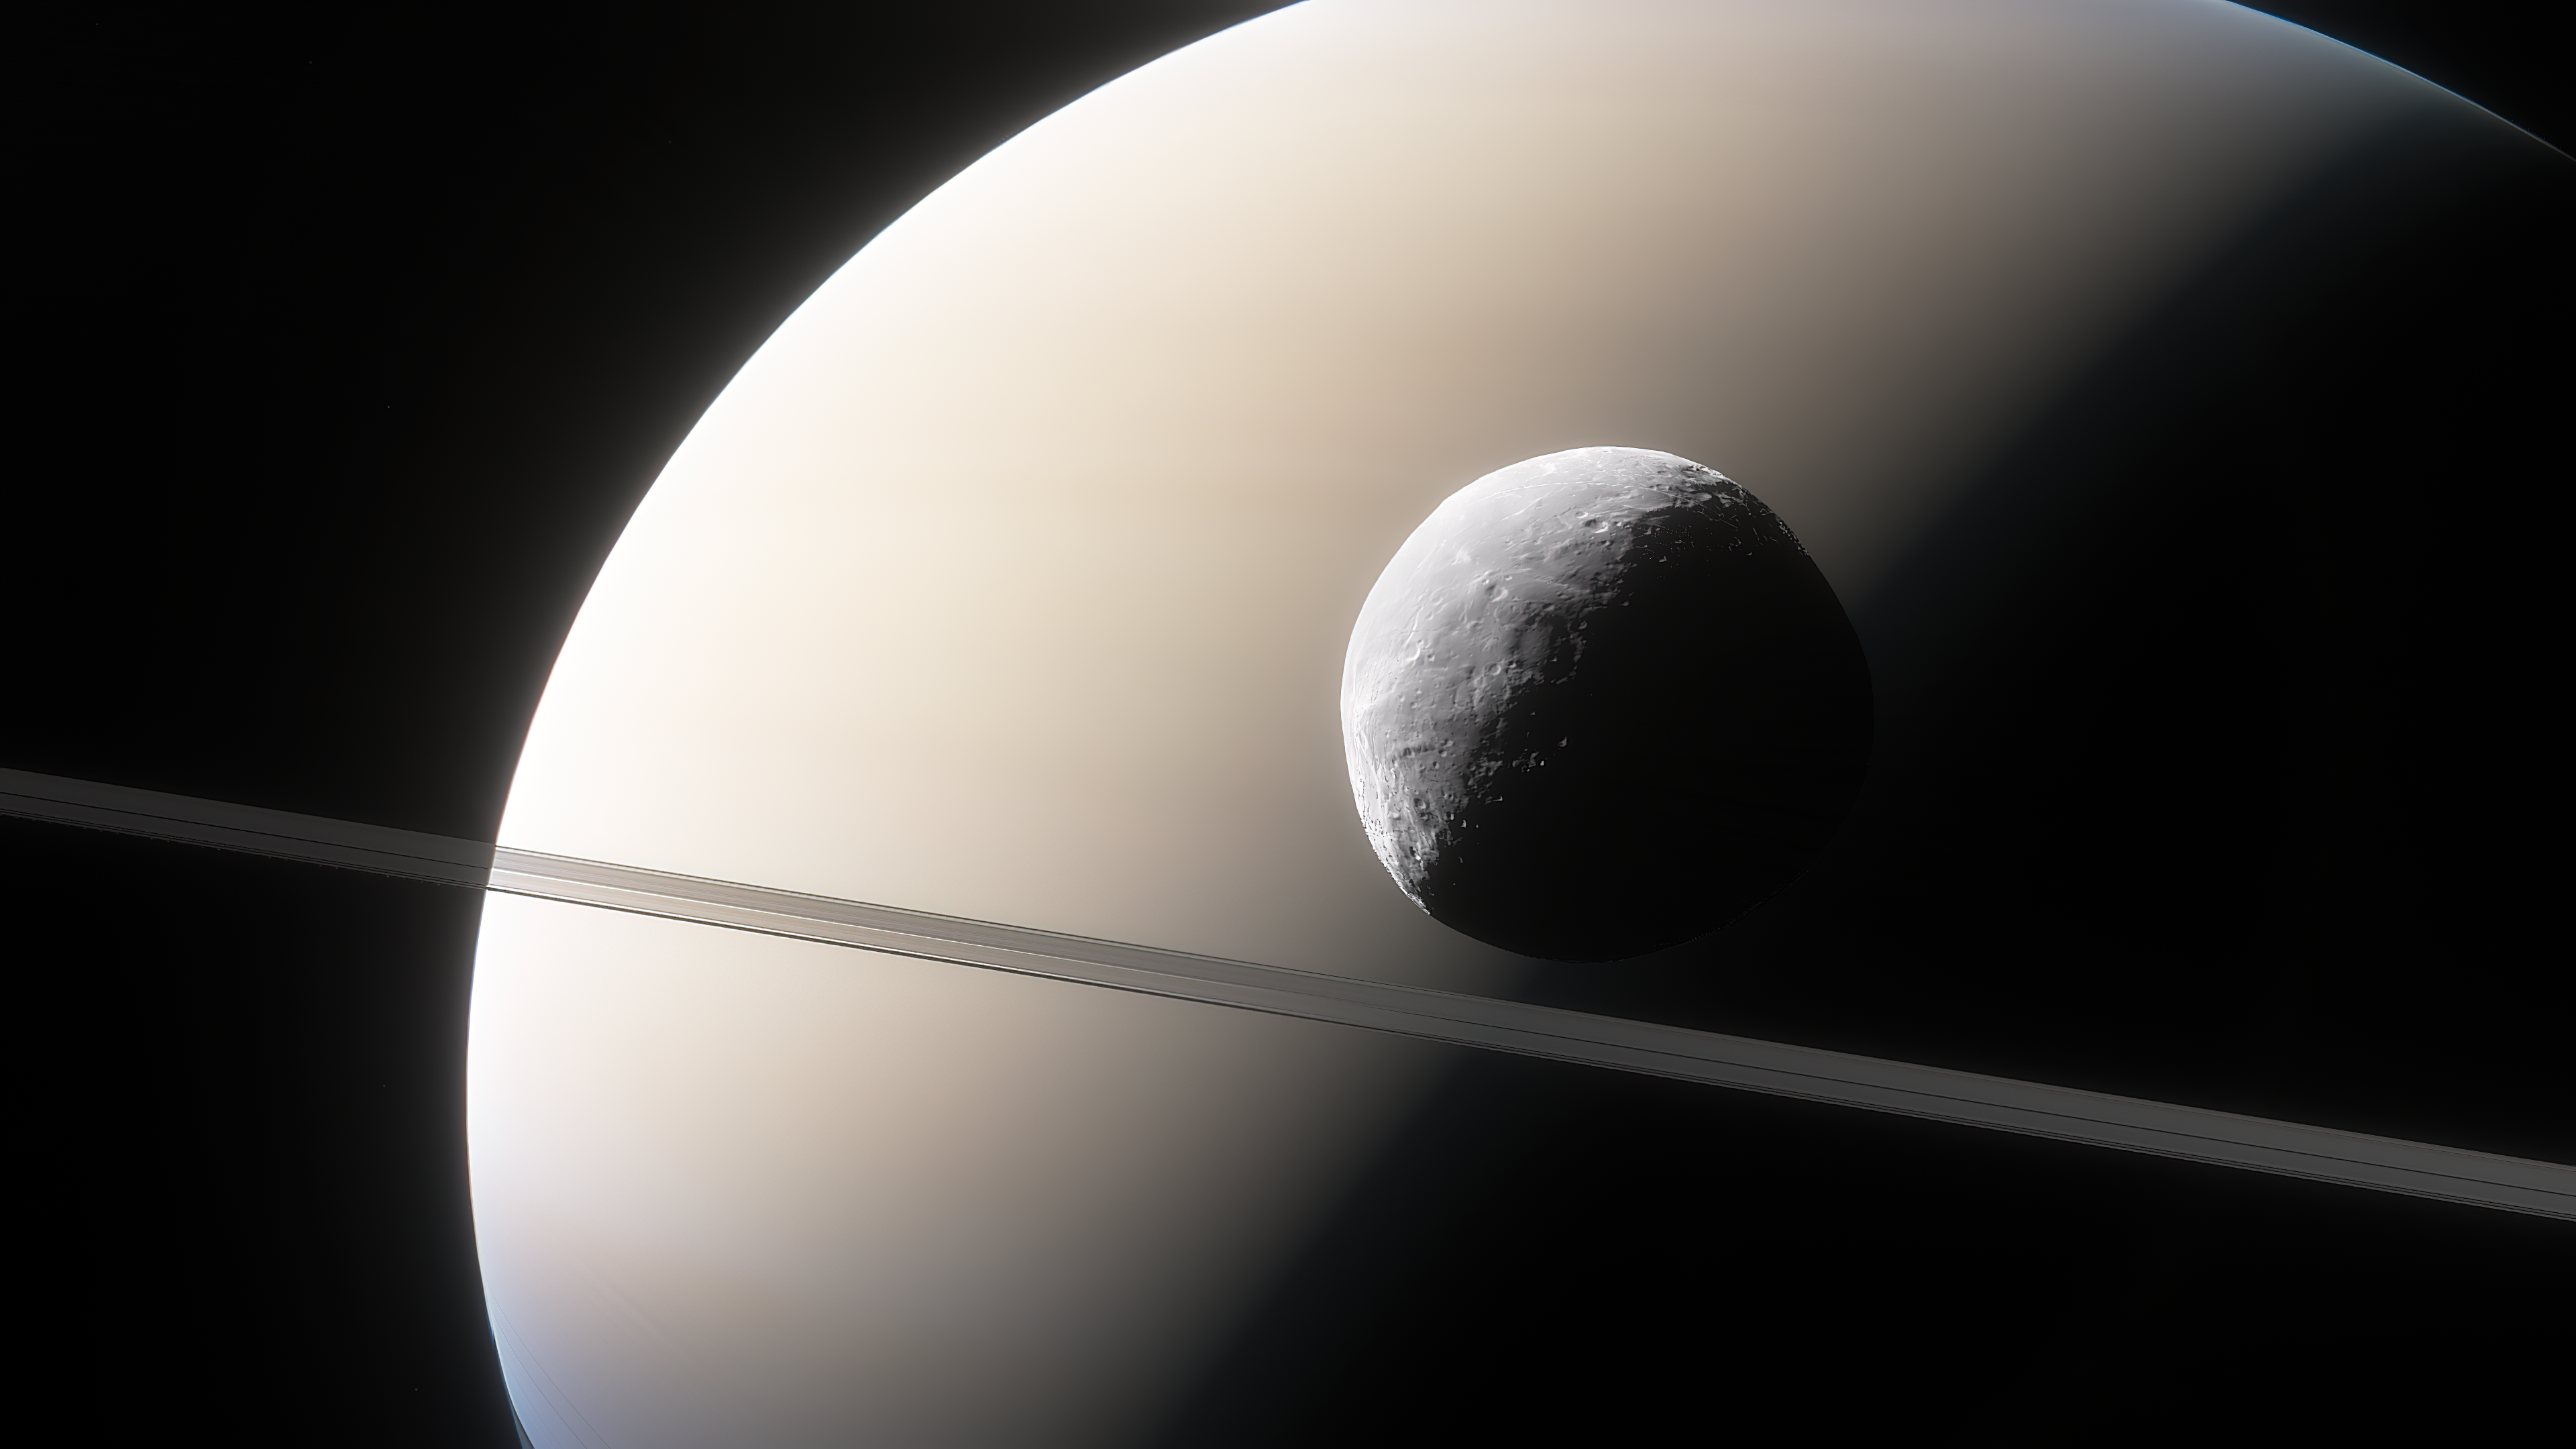 Moon orbiting Saturn